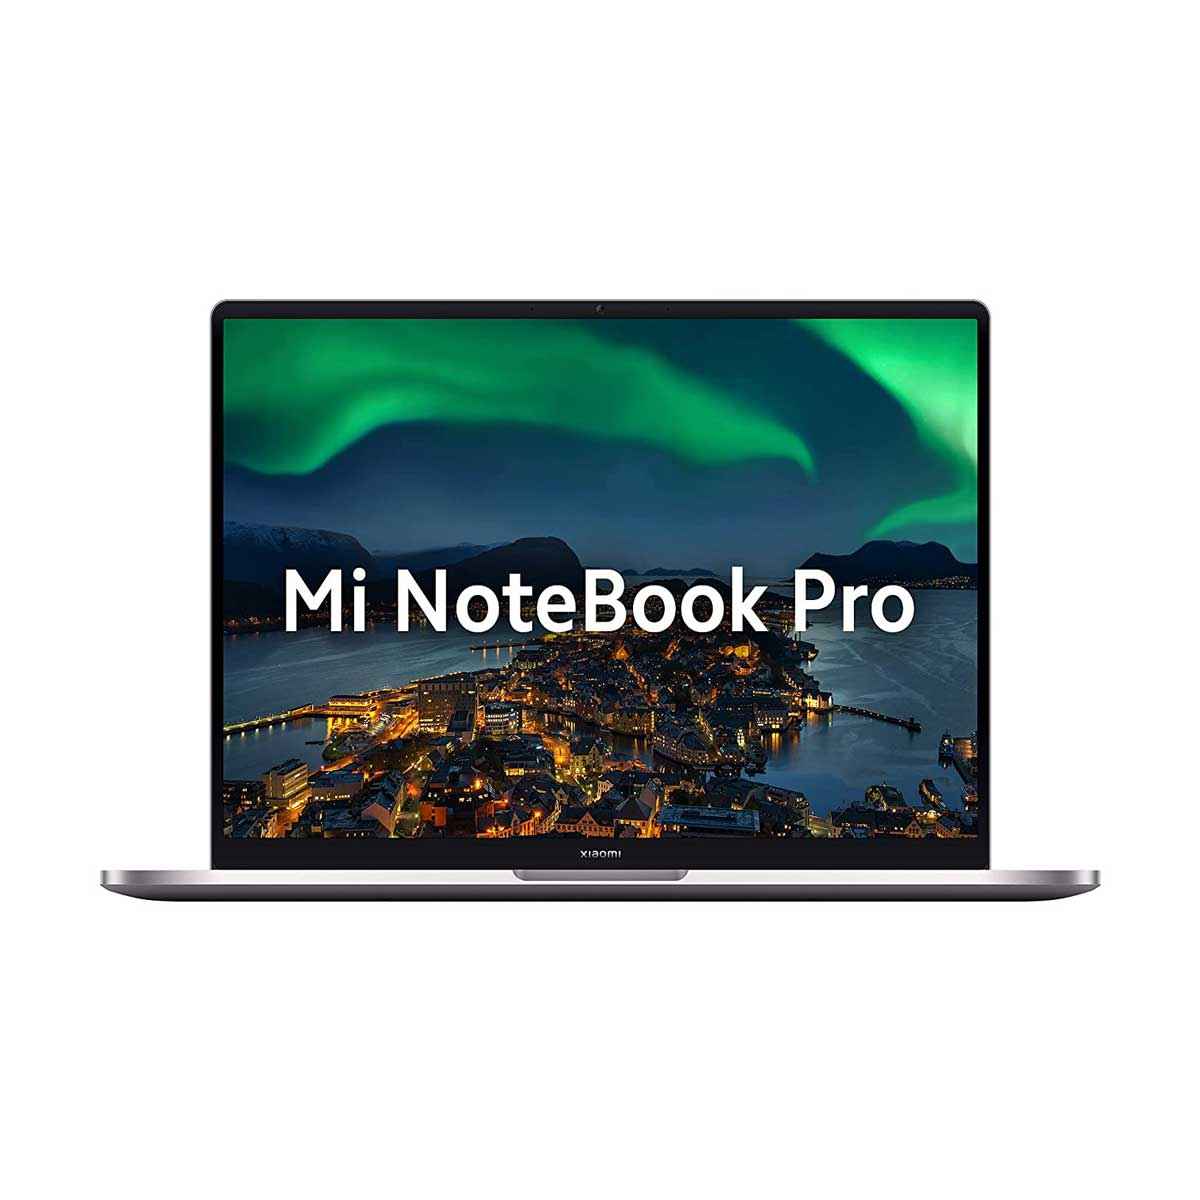 Mi Notebook Pro 